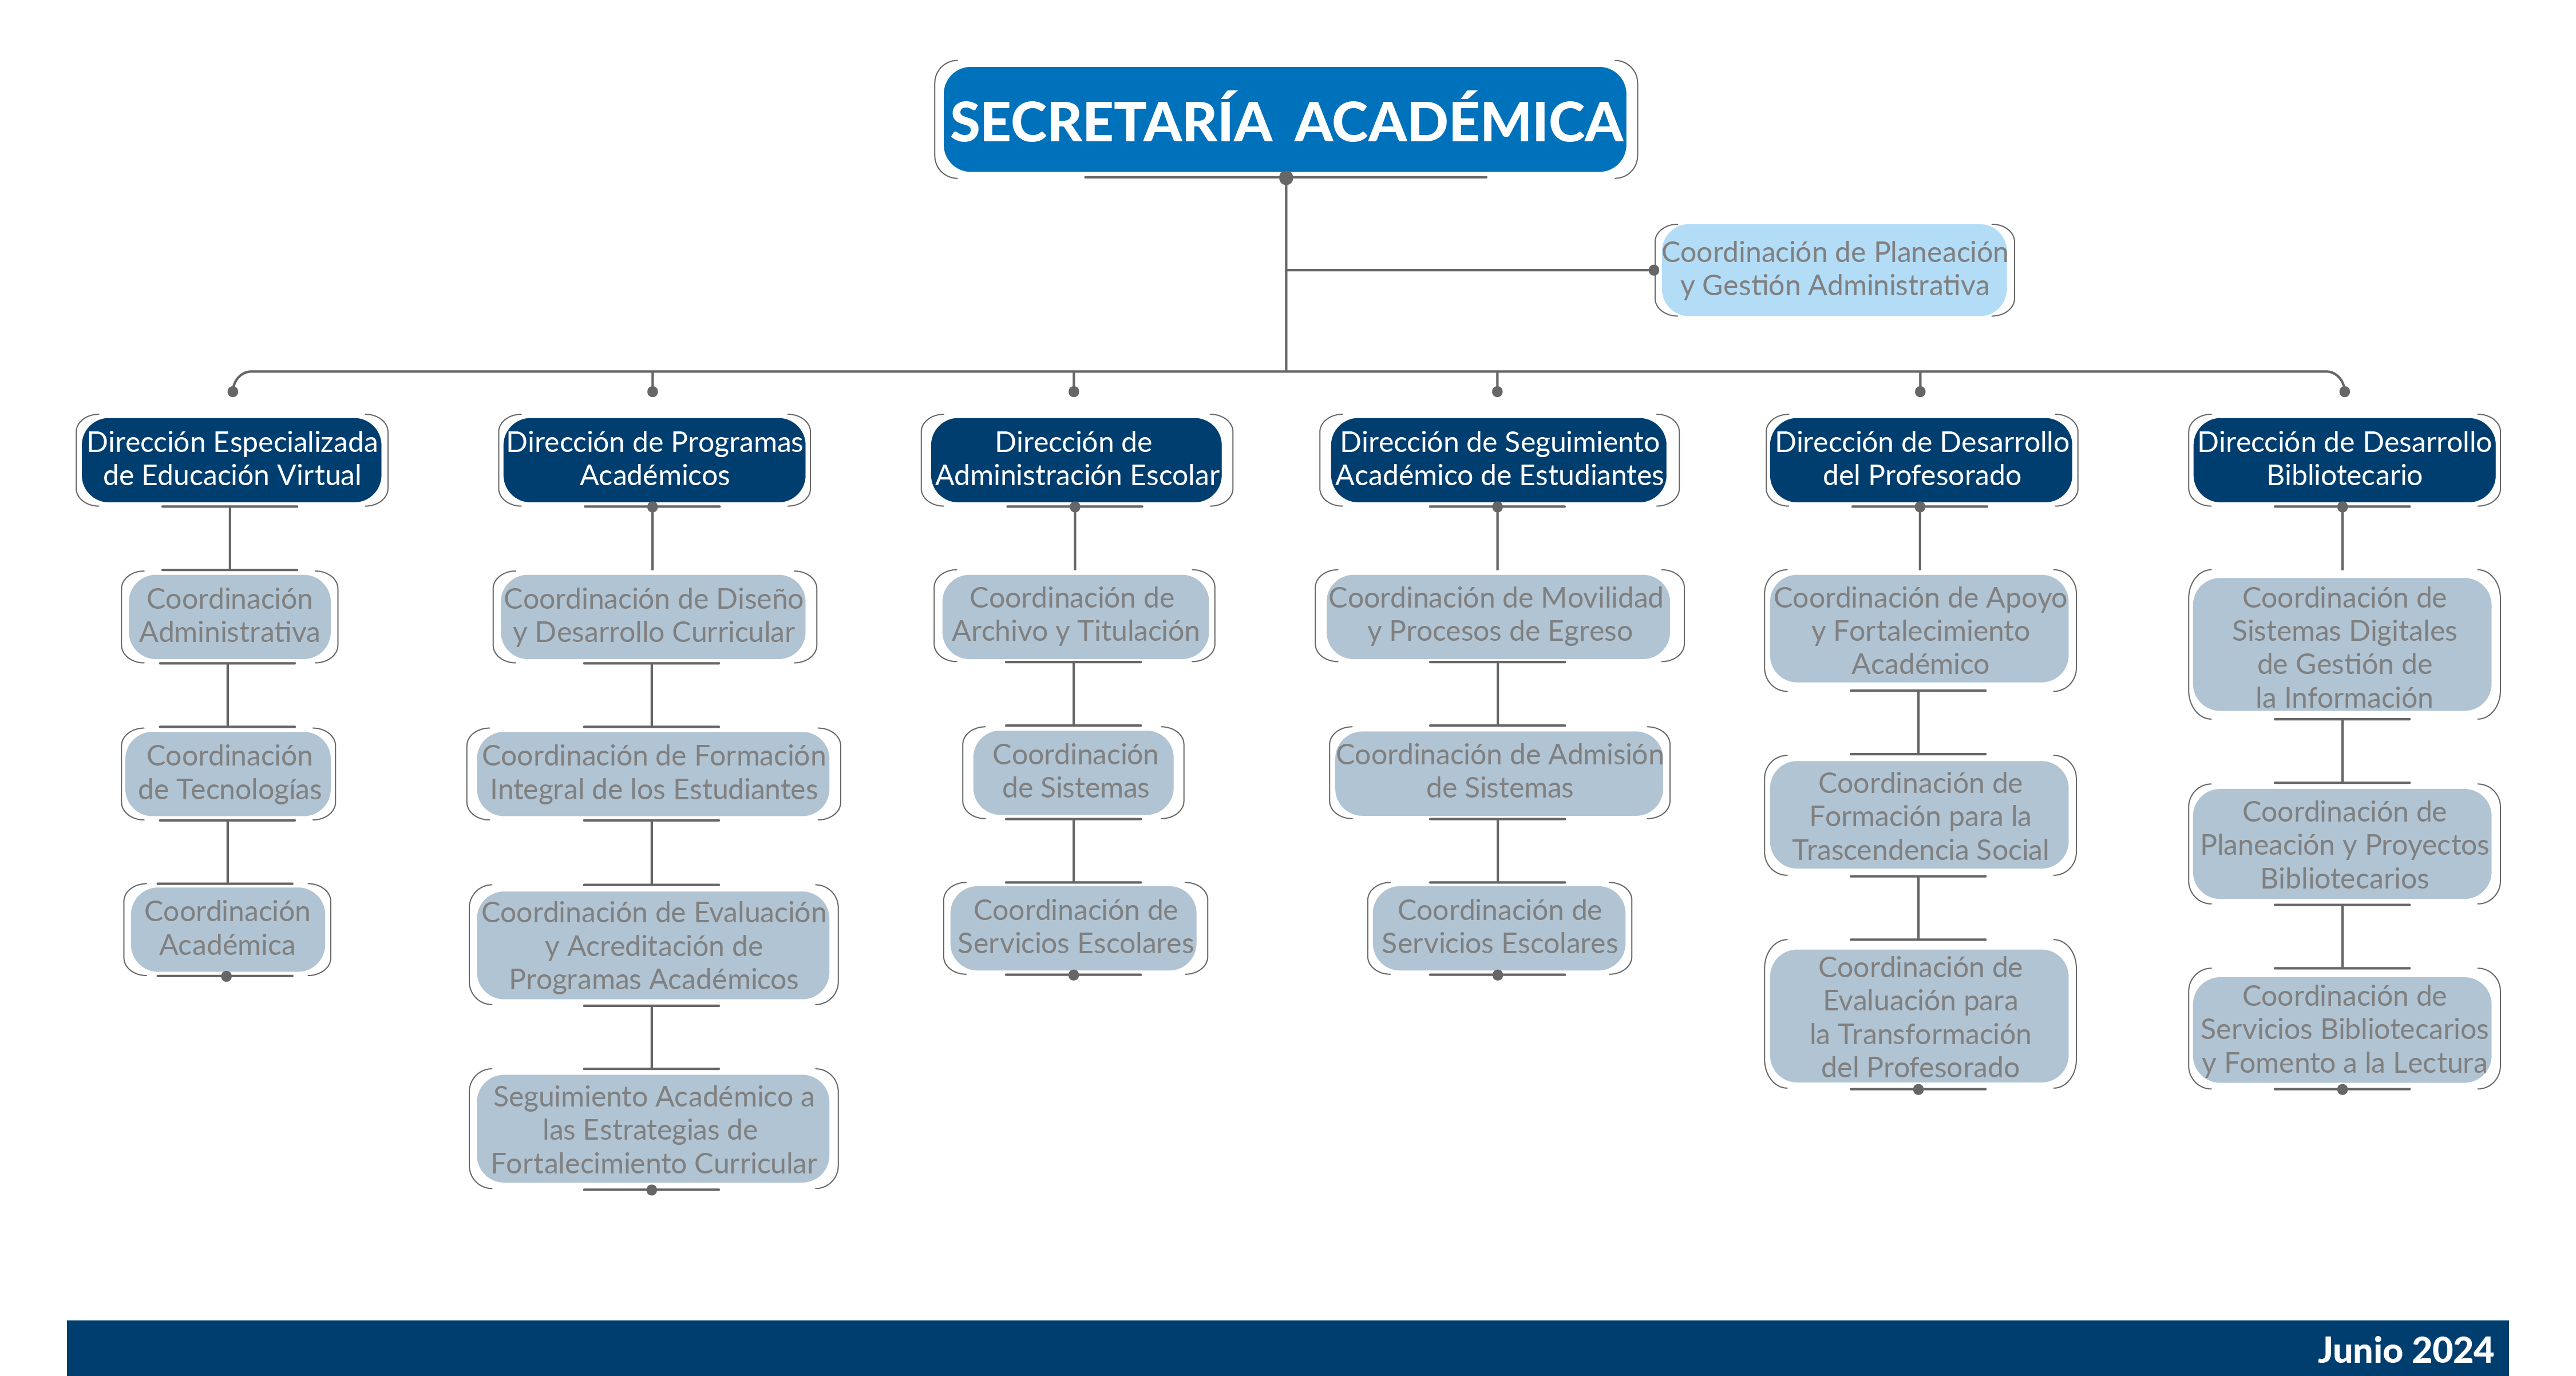 
        Secretaria_Academica_Organigrama.png
    